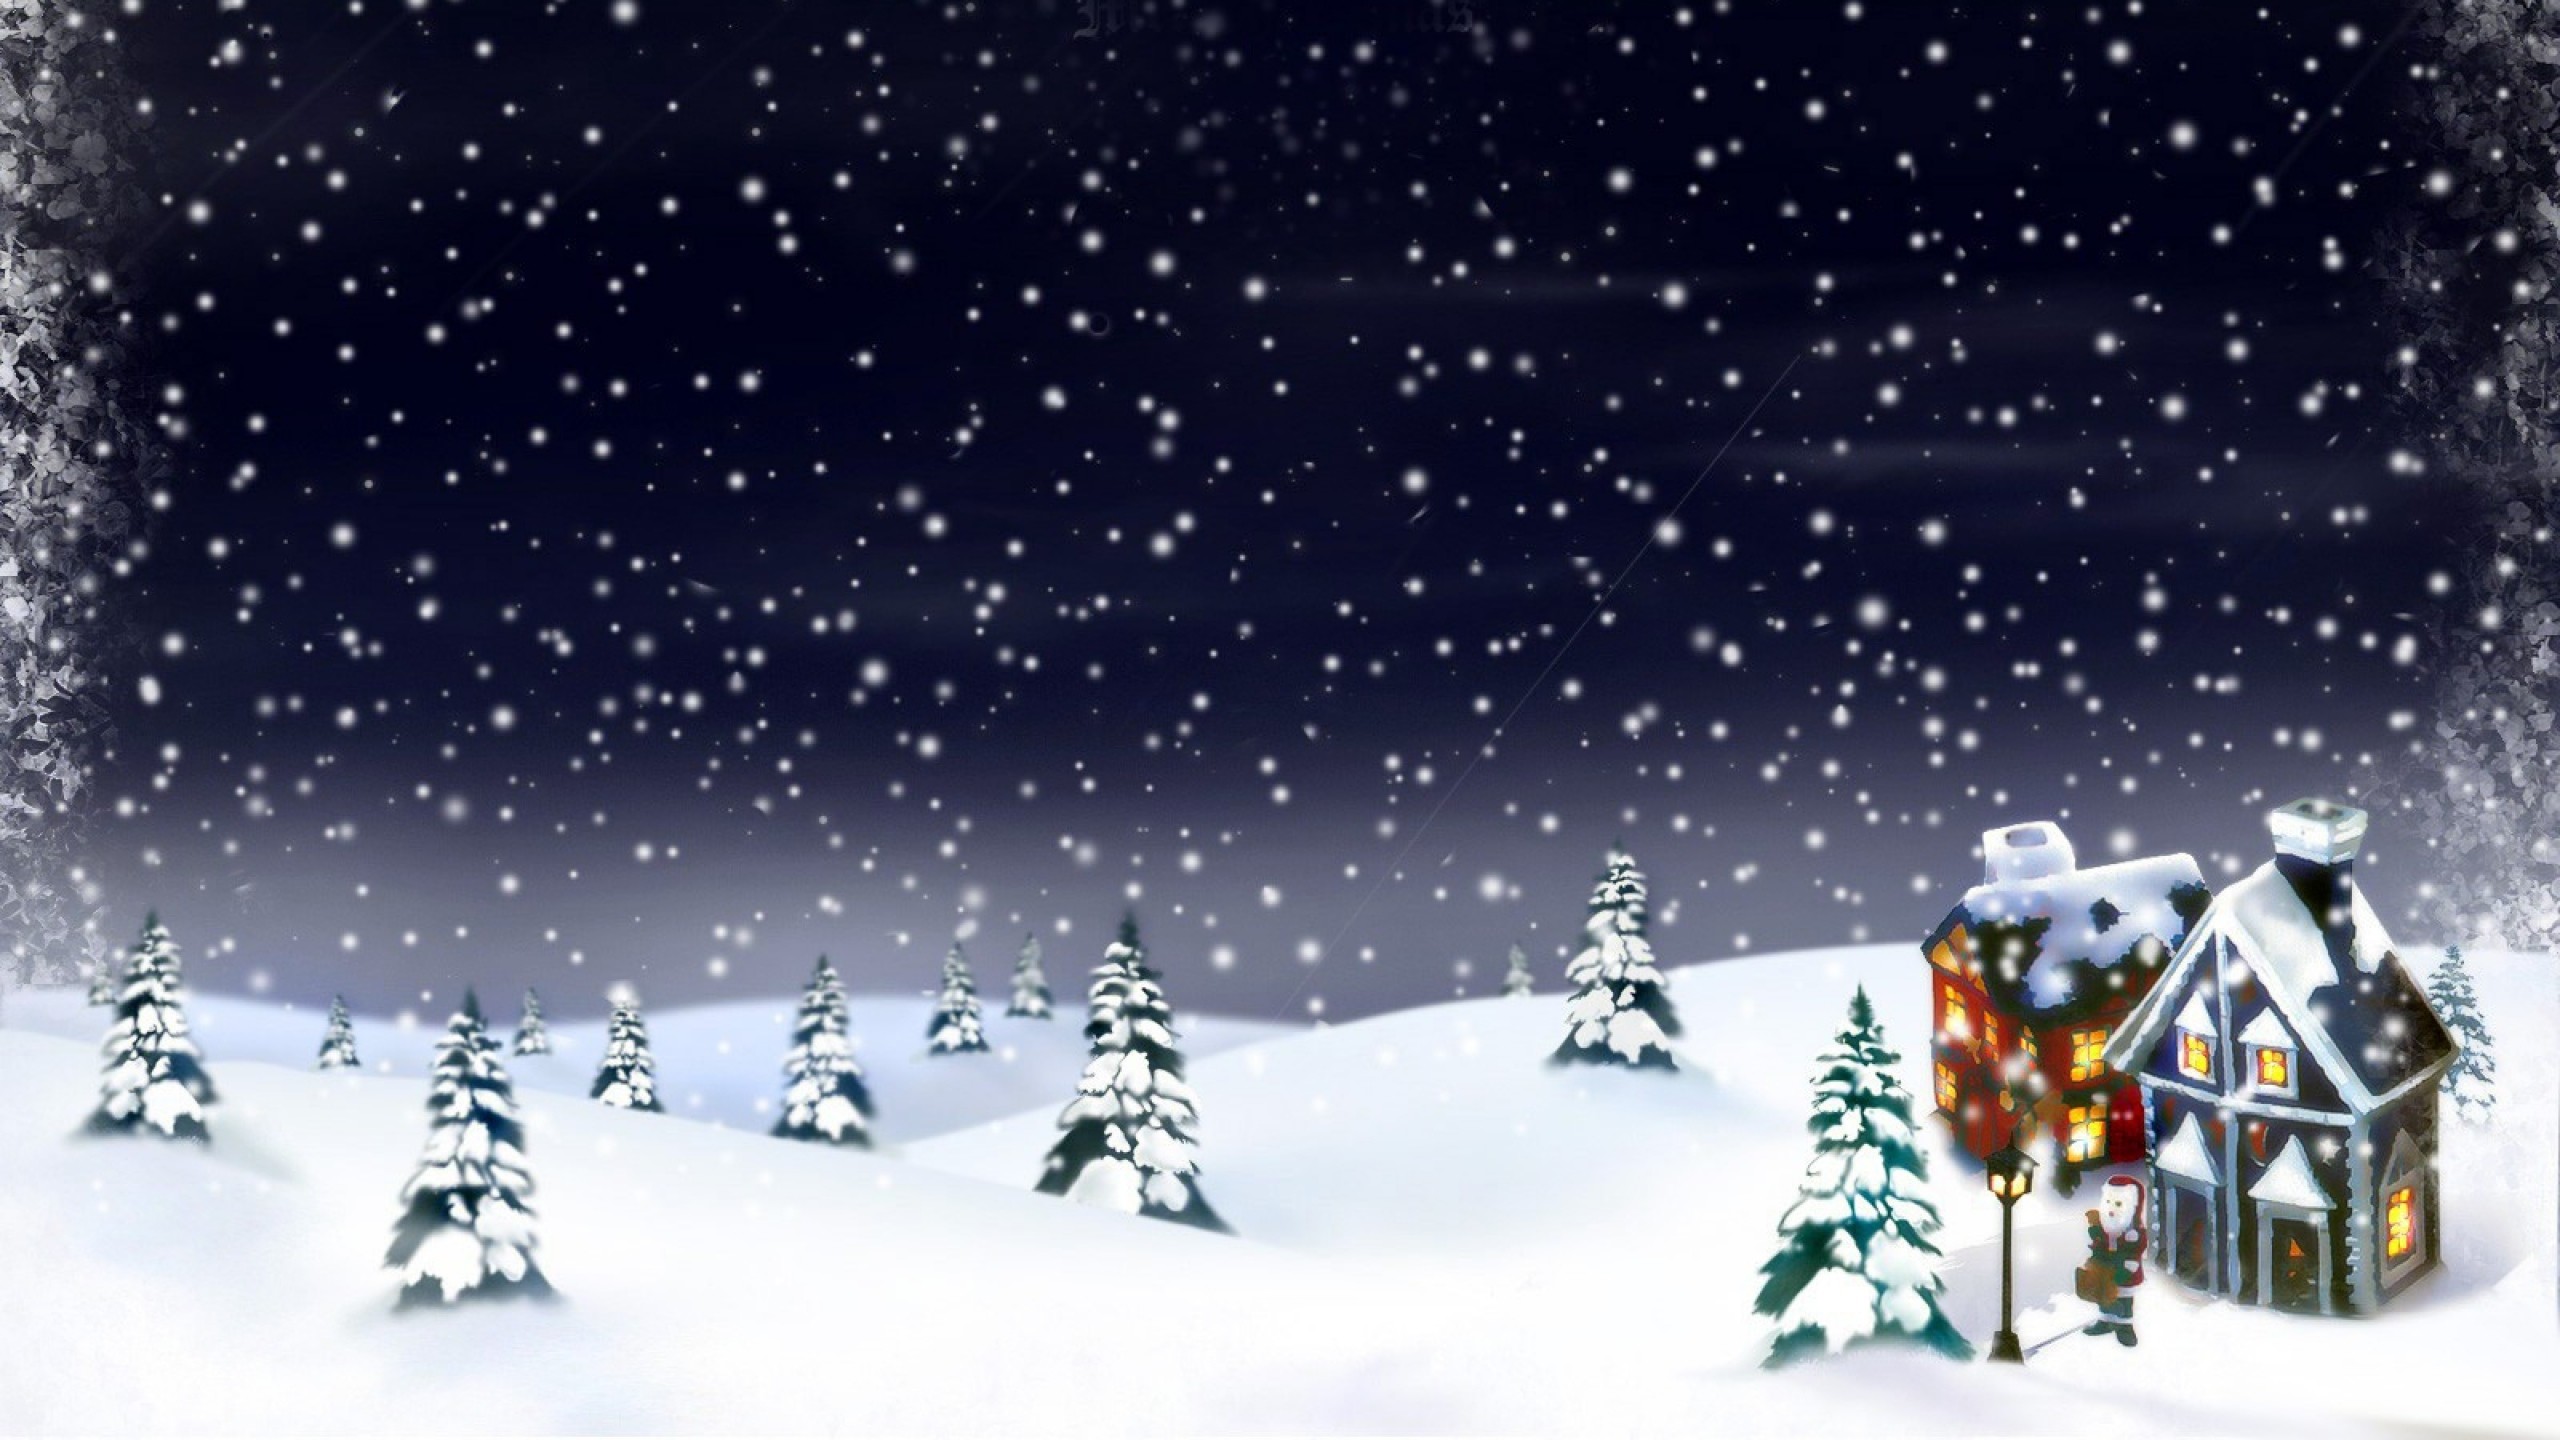 2560x1440 Snow fall Christmas wallpaper